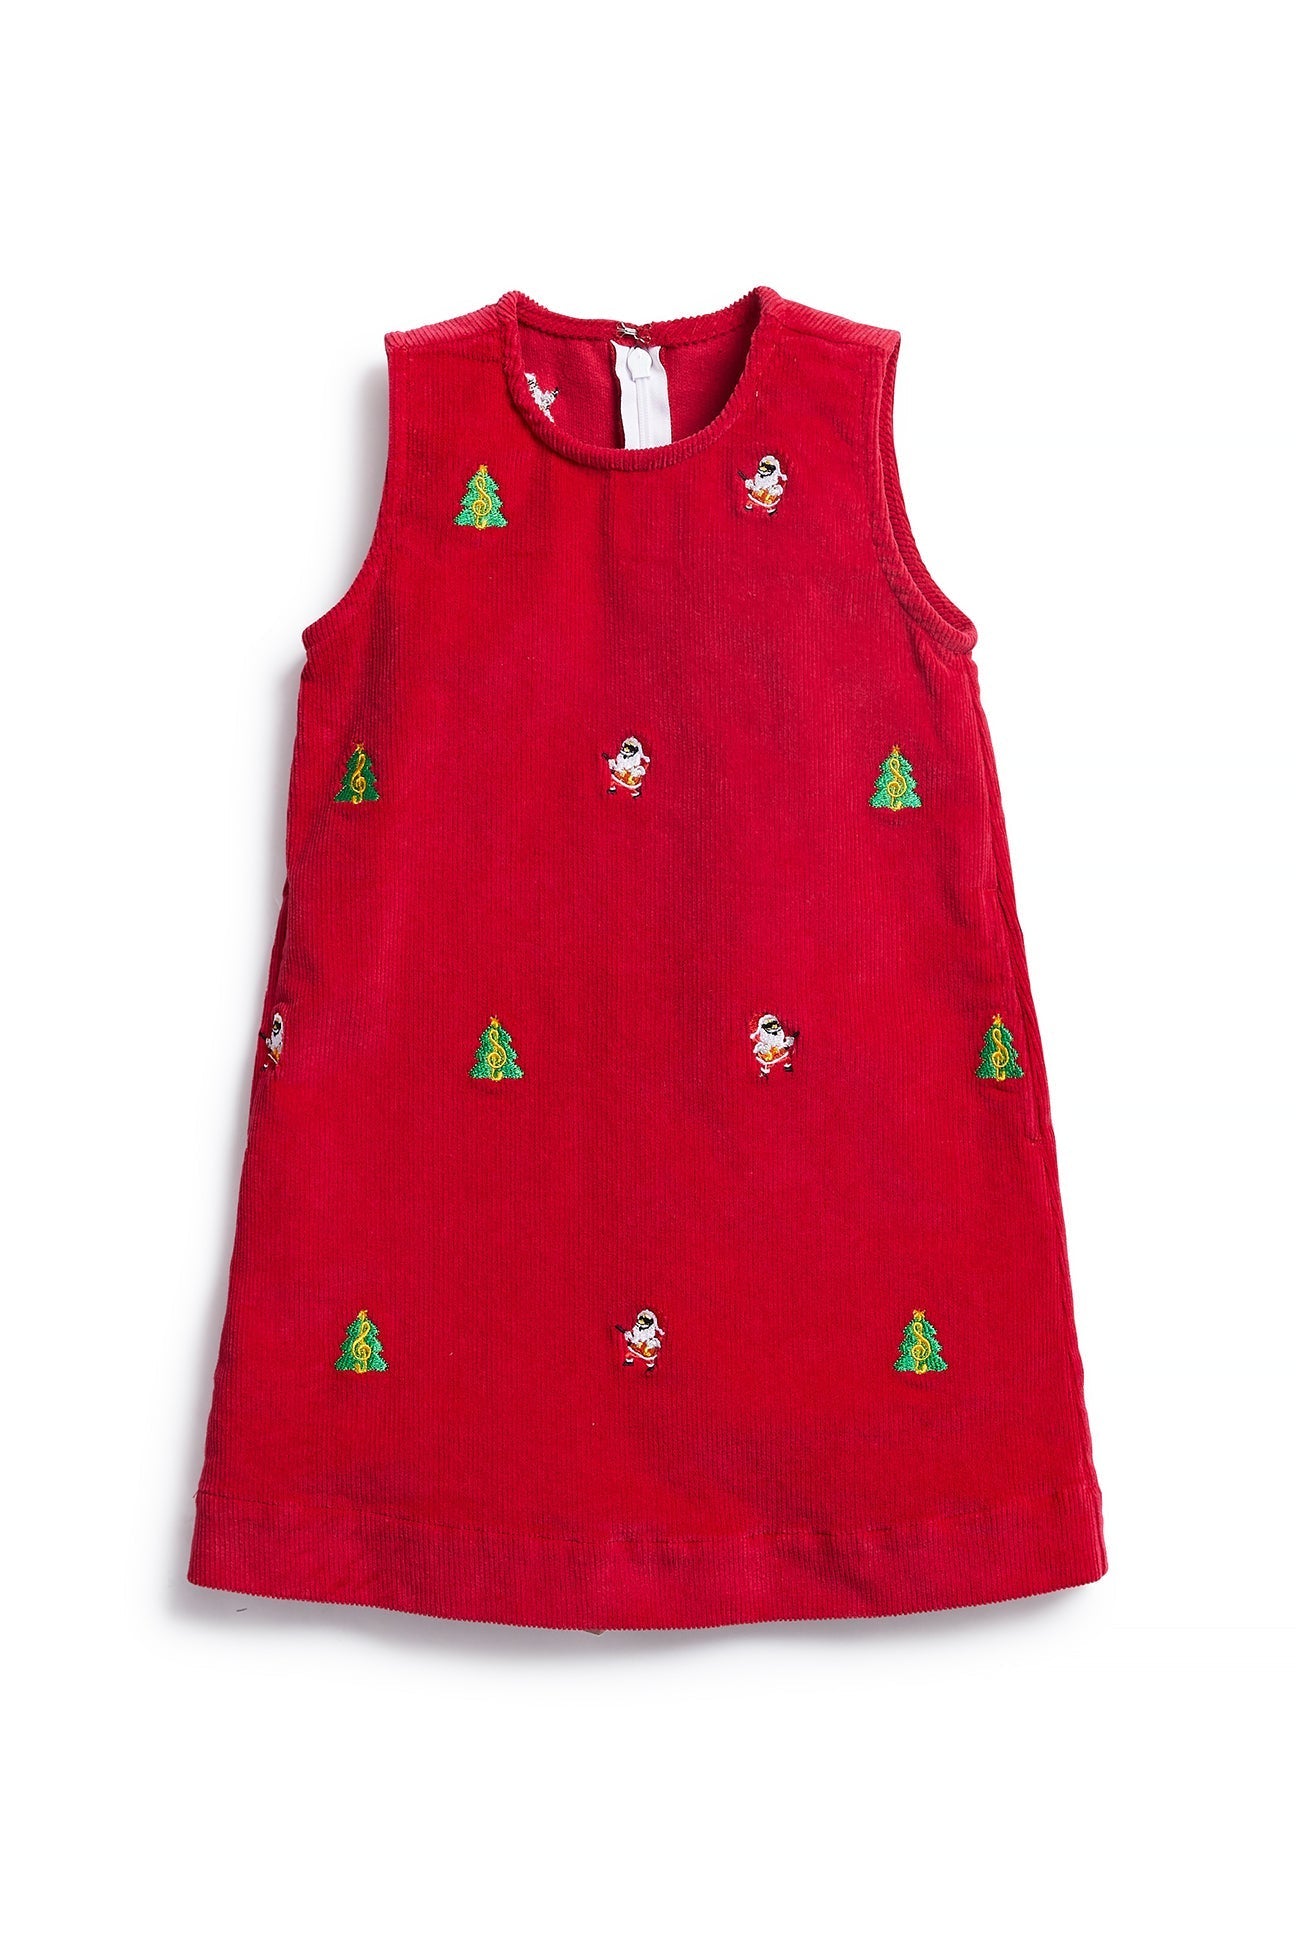 Girls Shift Dress Corduroy Crimson with Rockin Around the Christmas Tree GIRLS DRESSES Castaway Nantucket Island